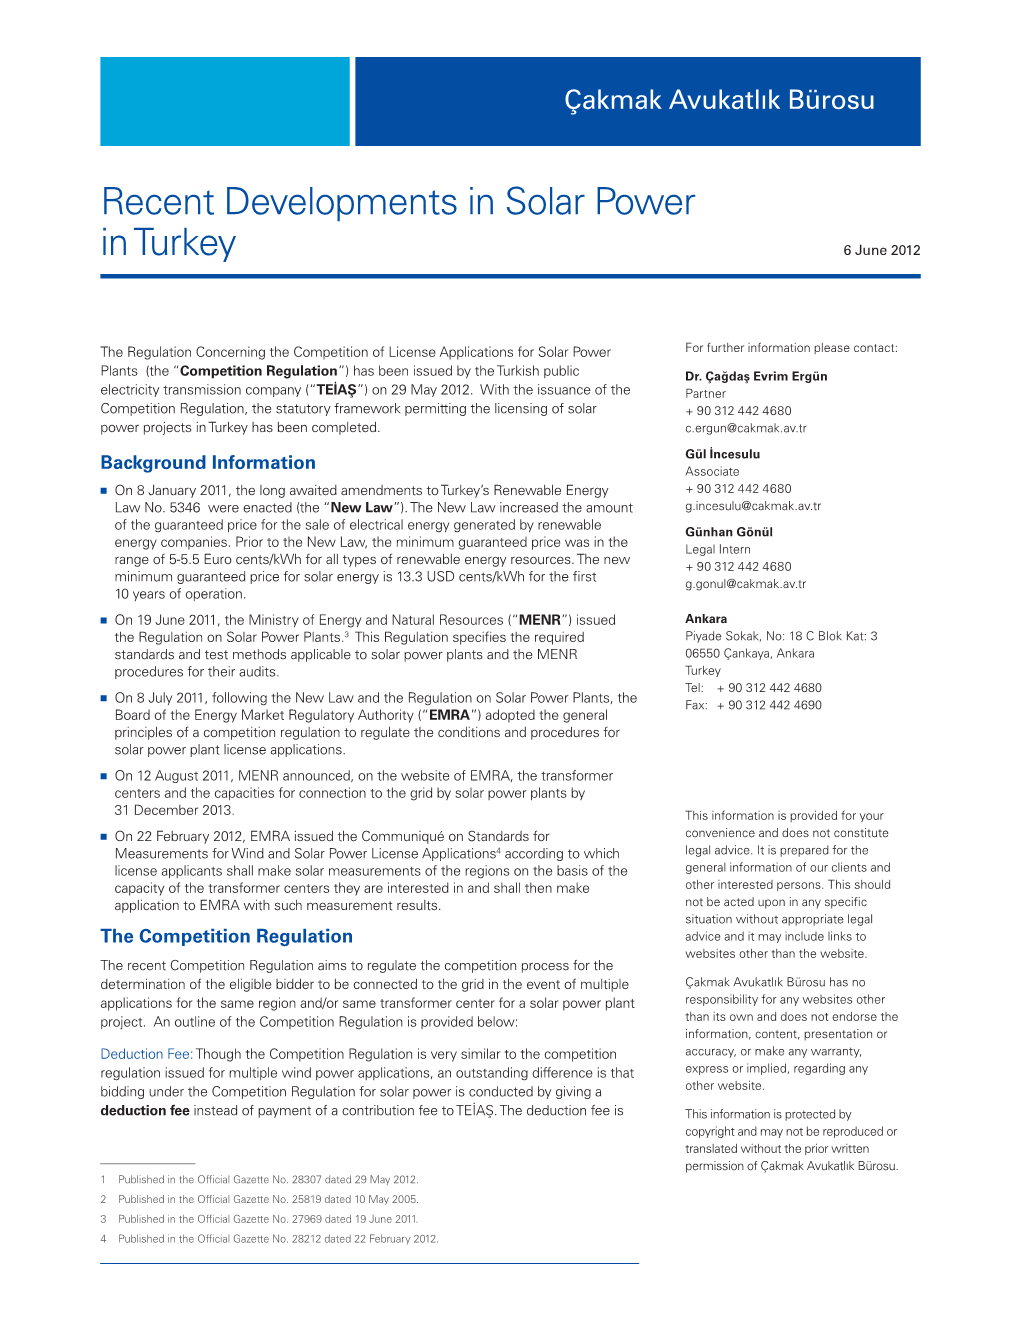 Recent Developments in Solar Power in Turkey 6 June 2012